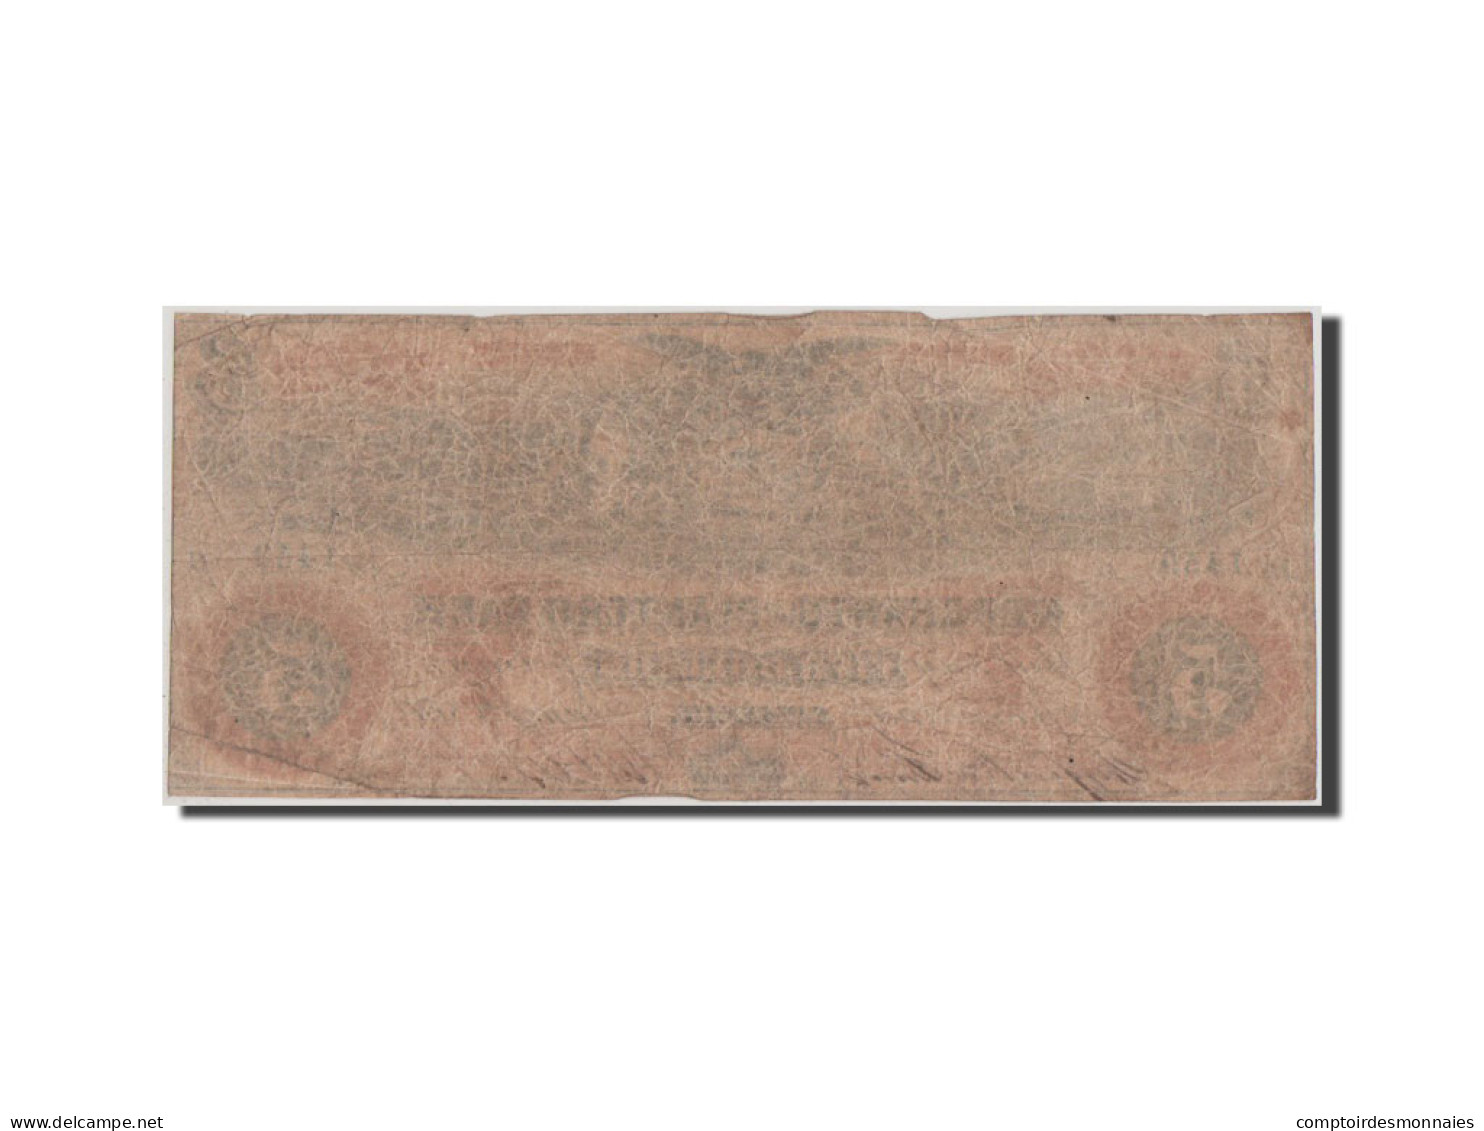 Billet, États-Unis, 5 Dollars, 1860, TB+ - Georgia